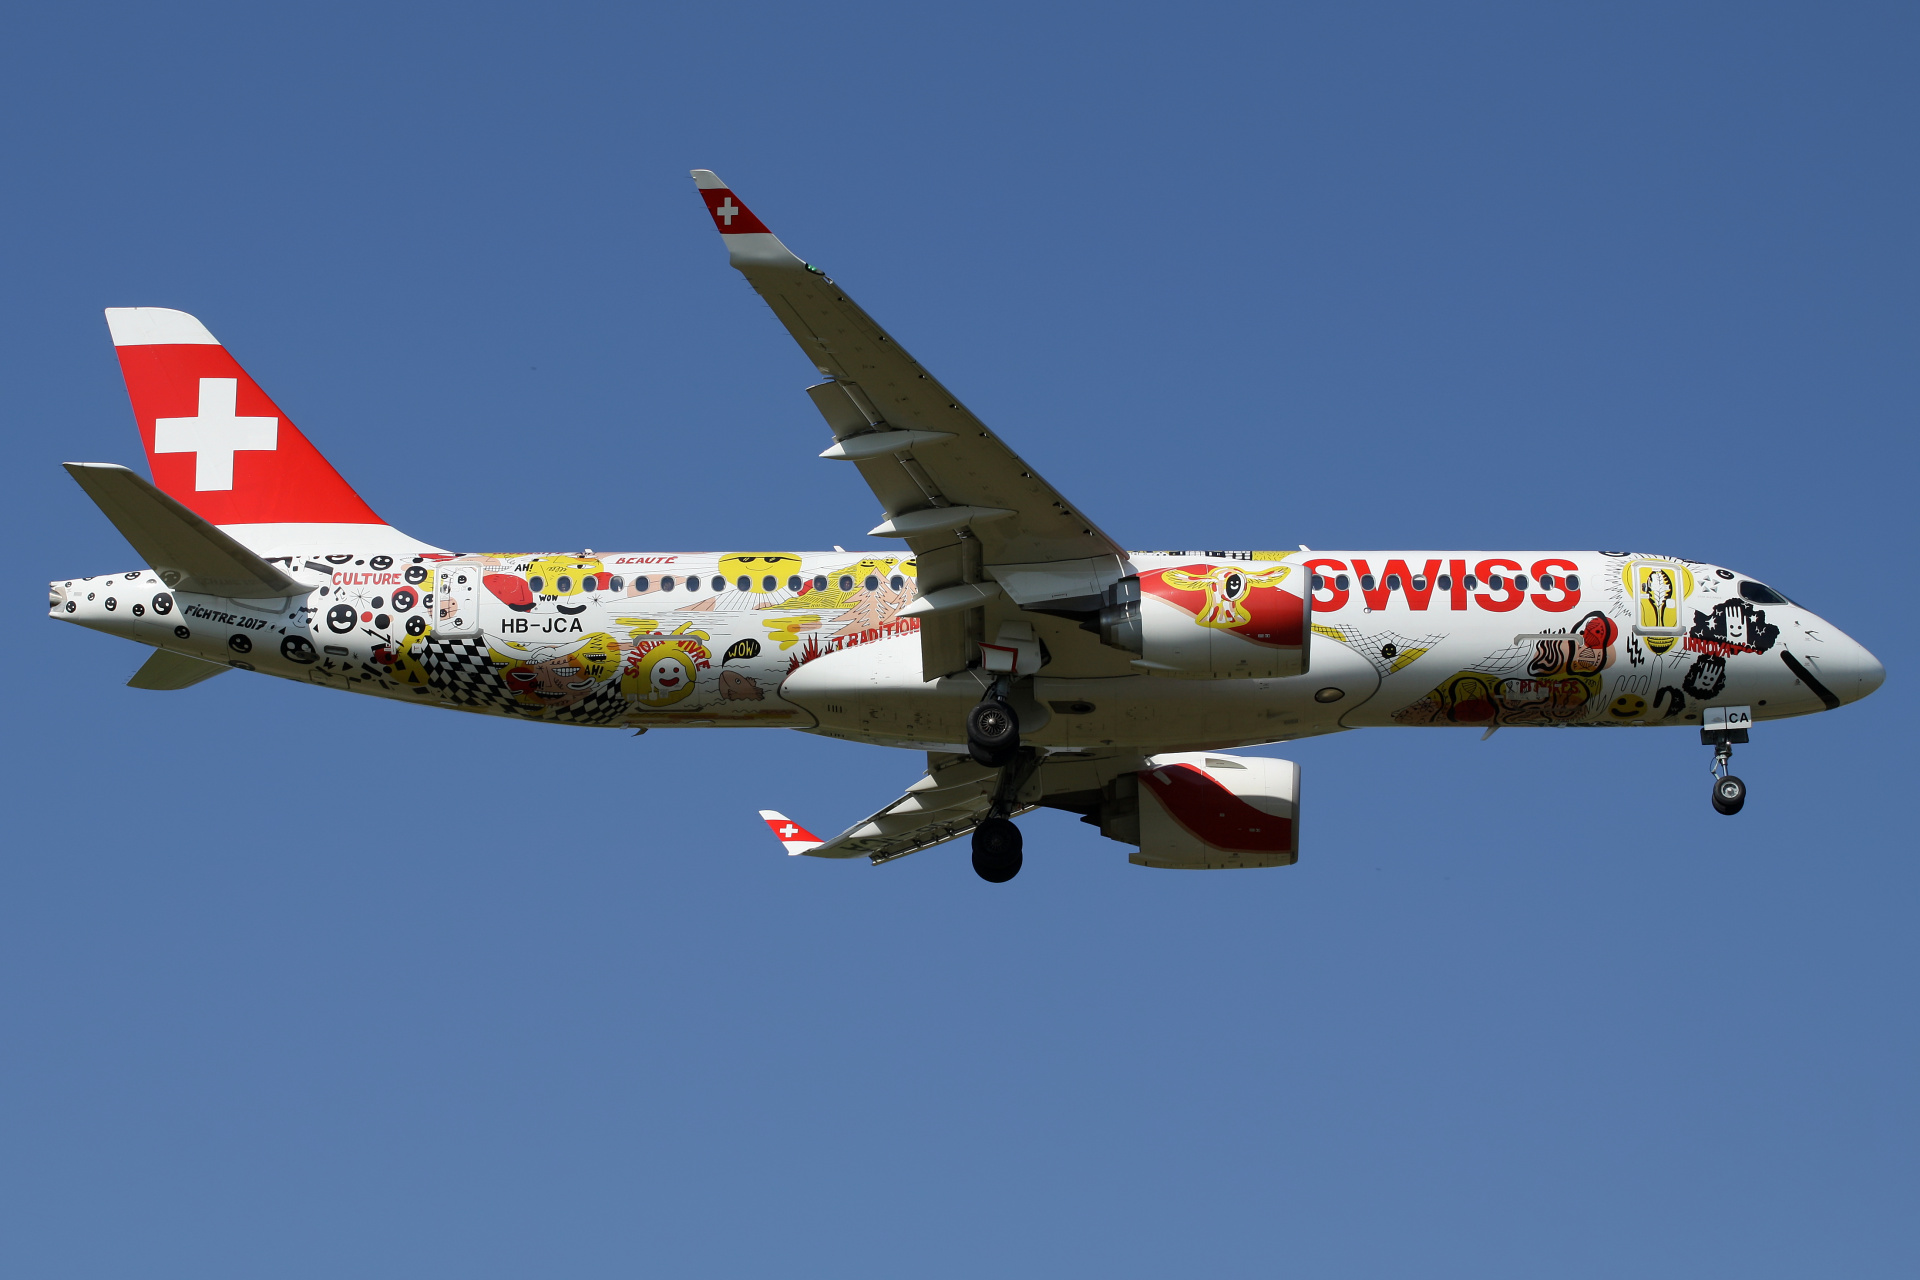 HB-JCA (Swiss Romandy livery) (Aircraft » EPWA Spotting » Airbus A220-300 » Swiss International Air Lines)